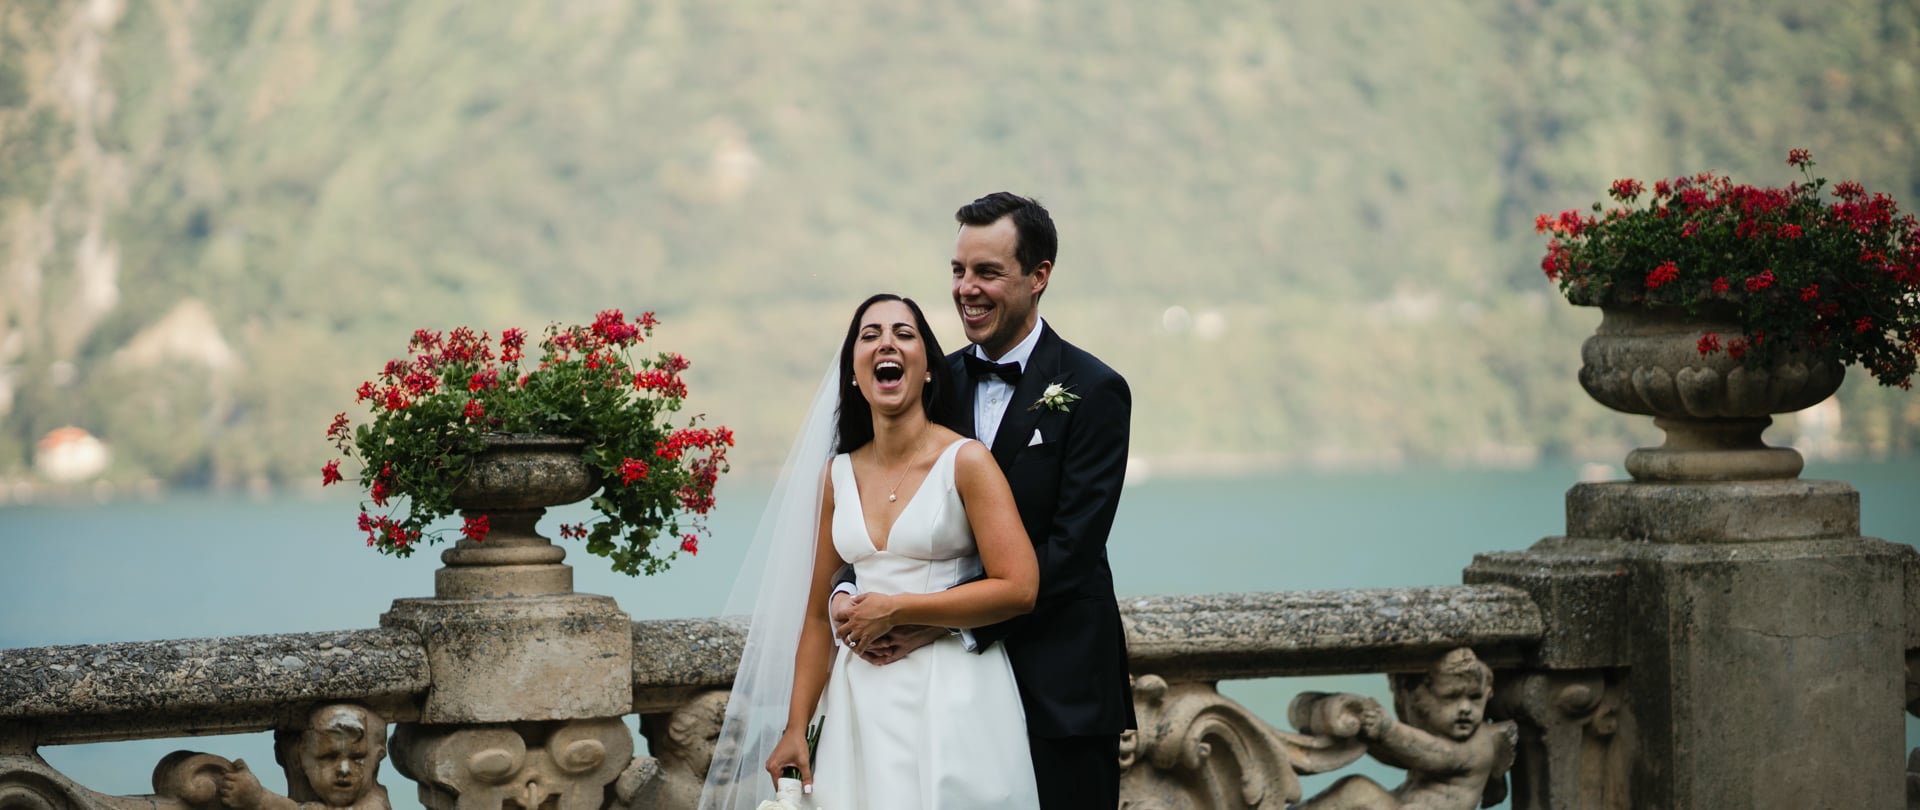 Shirin & Tom Wedding Video Filmed at Lake Como, Italy